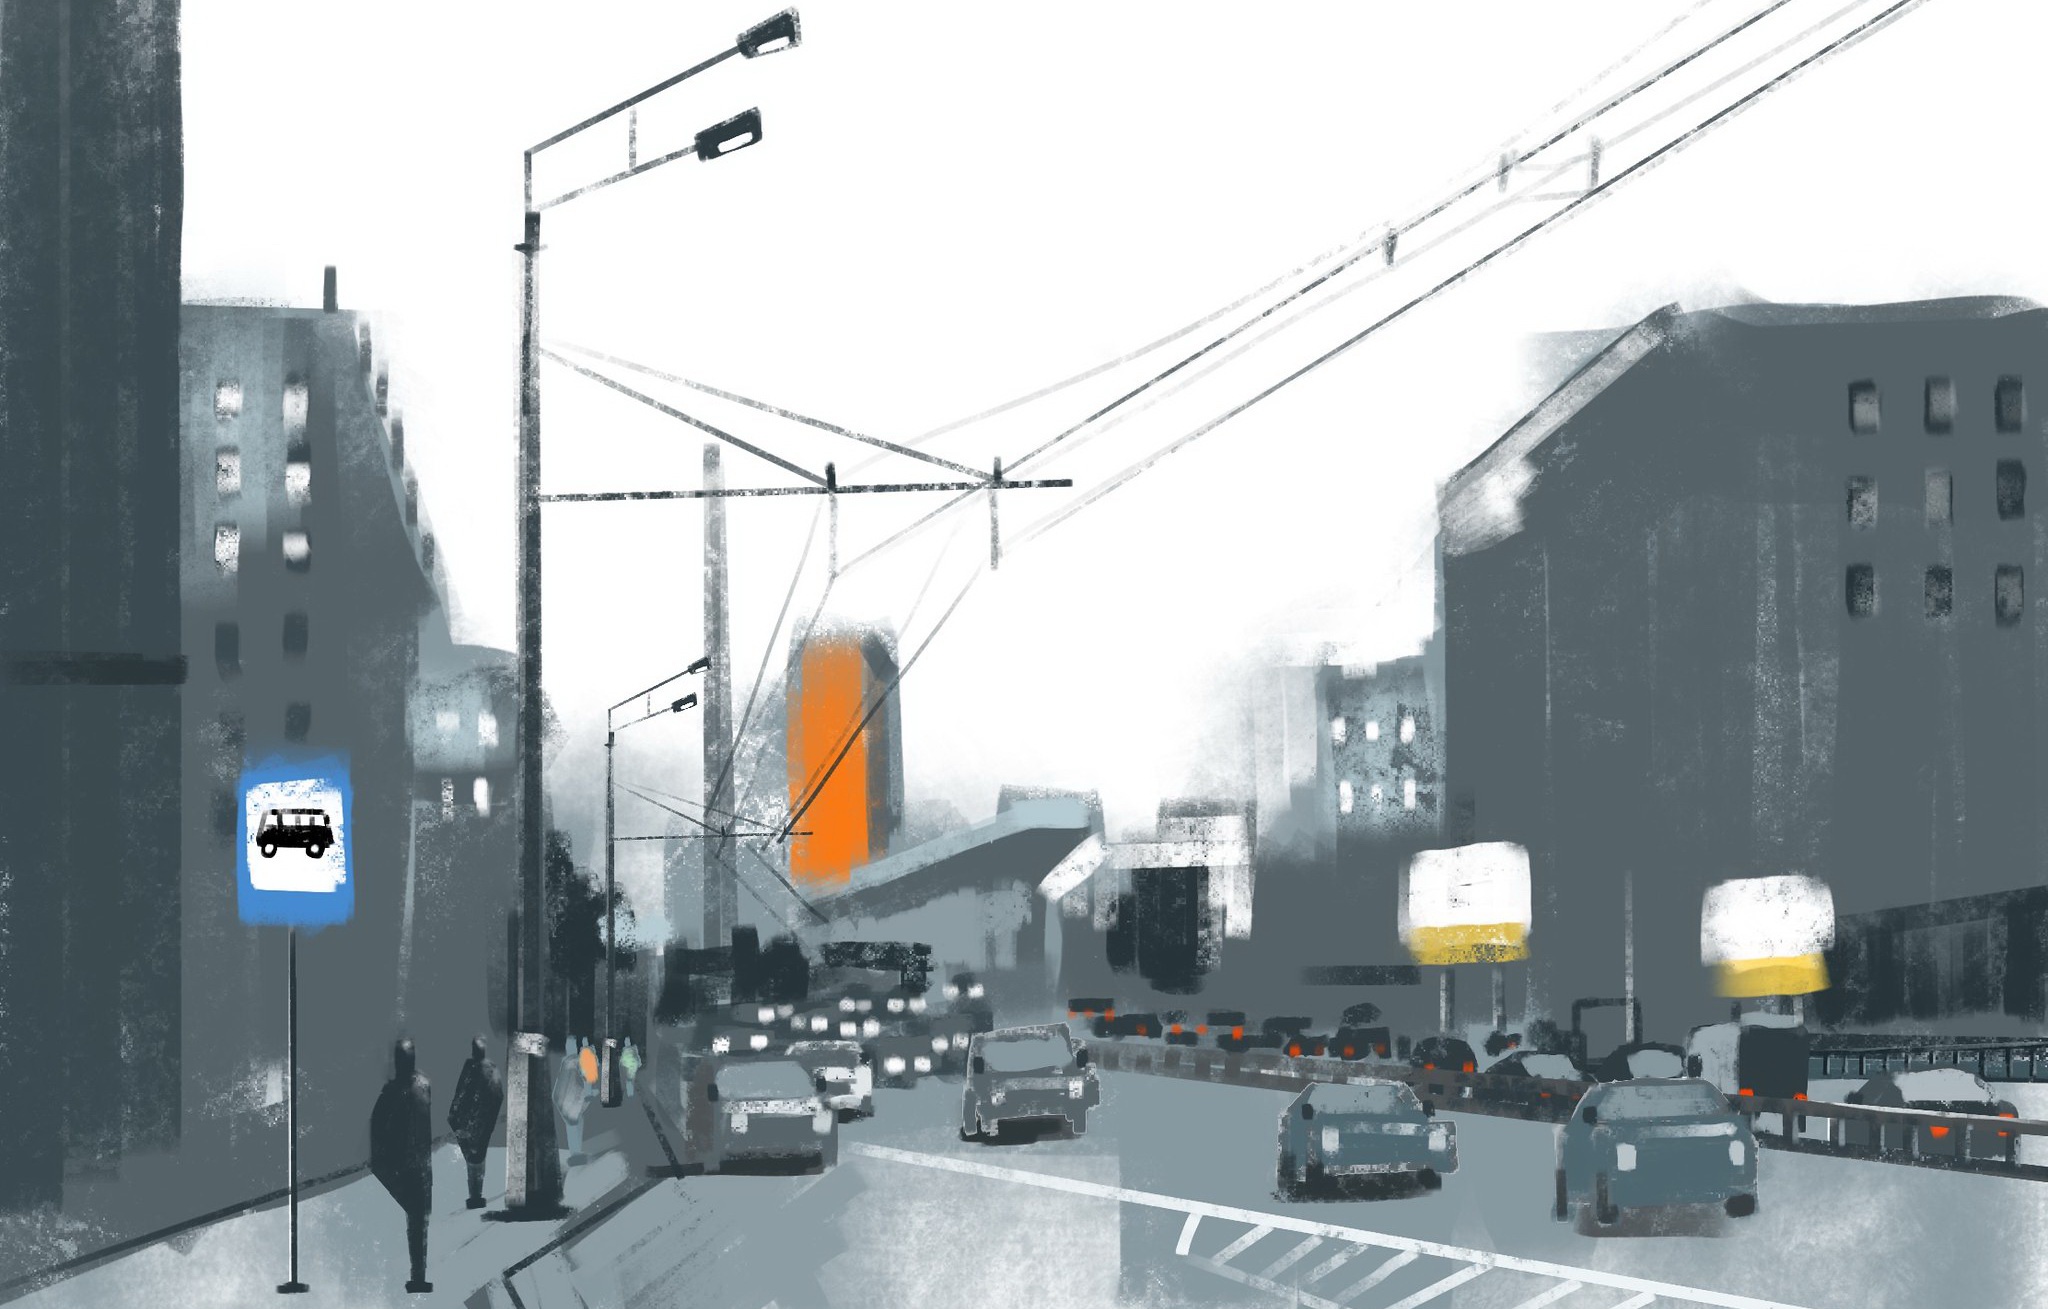 General 2048x1309 city urban traffic cityscape artwork